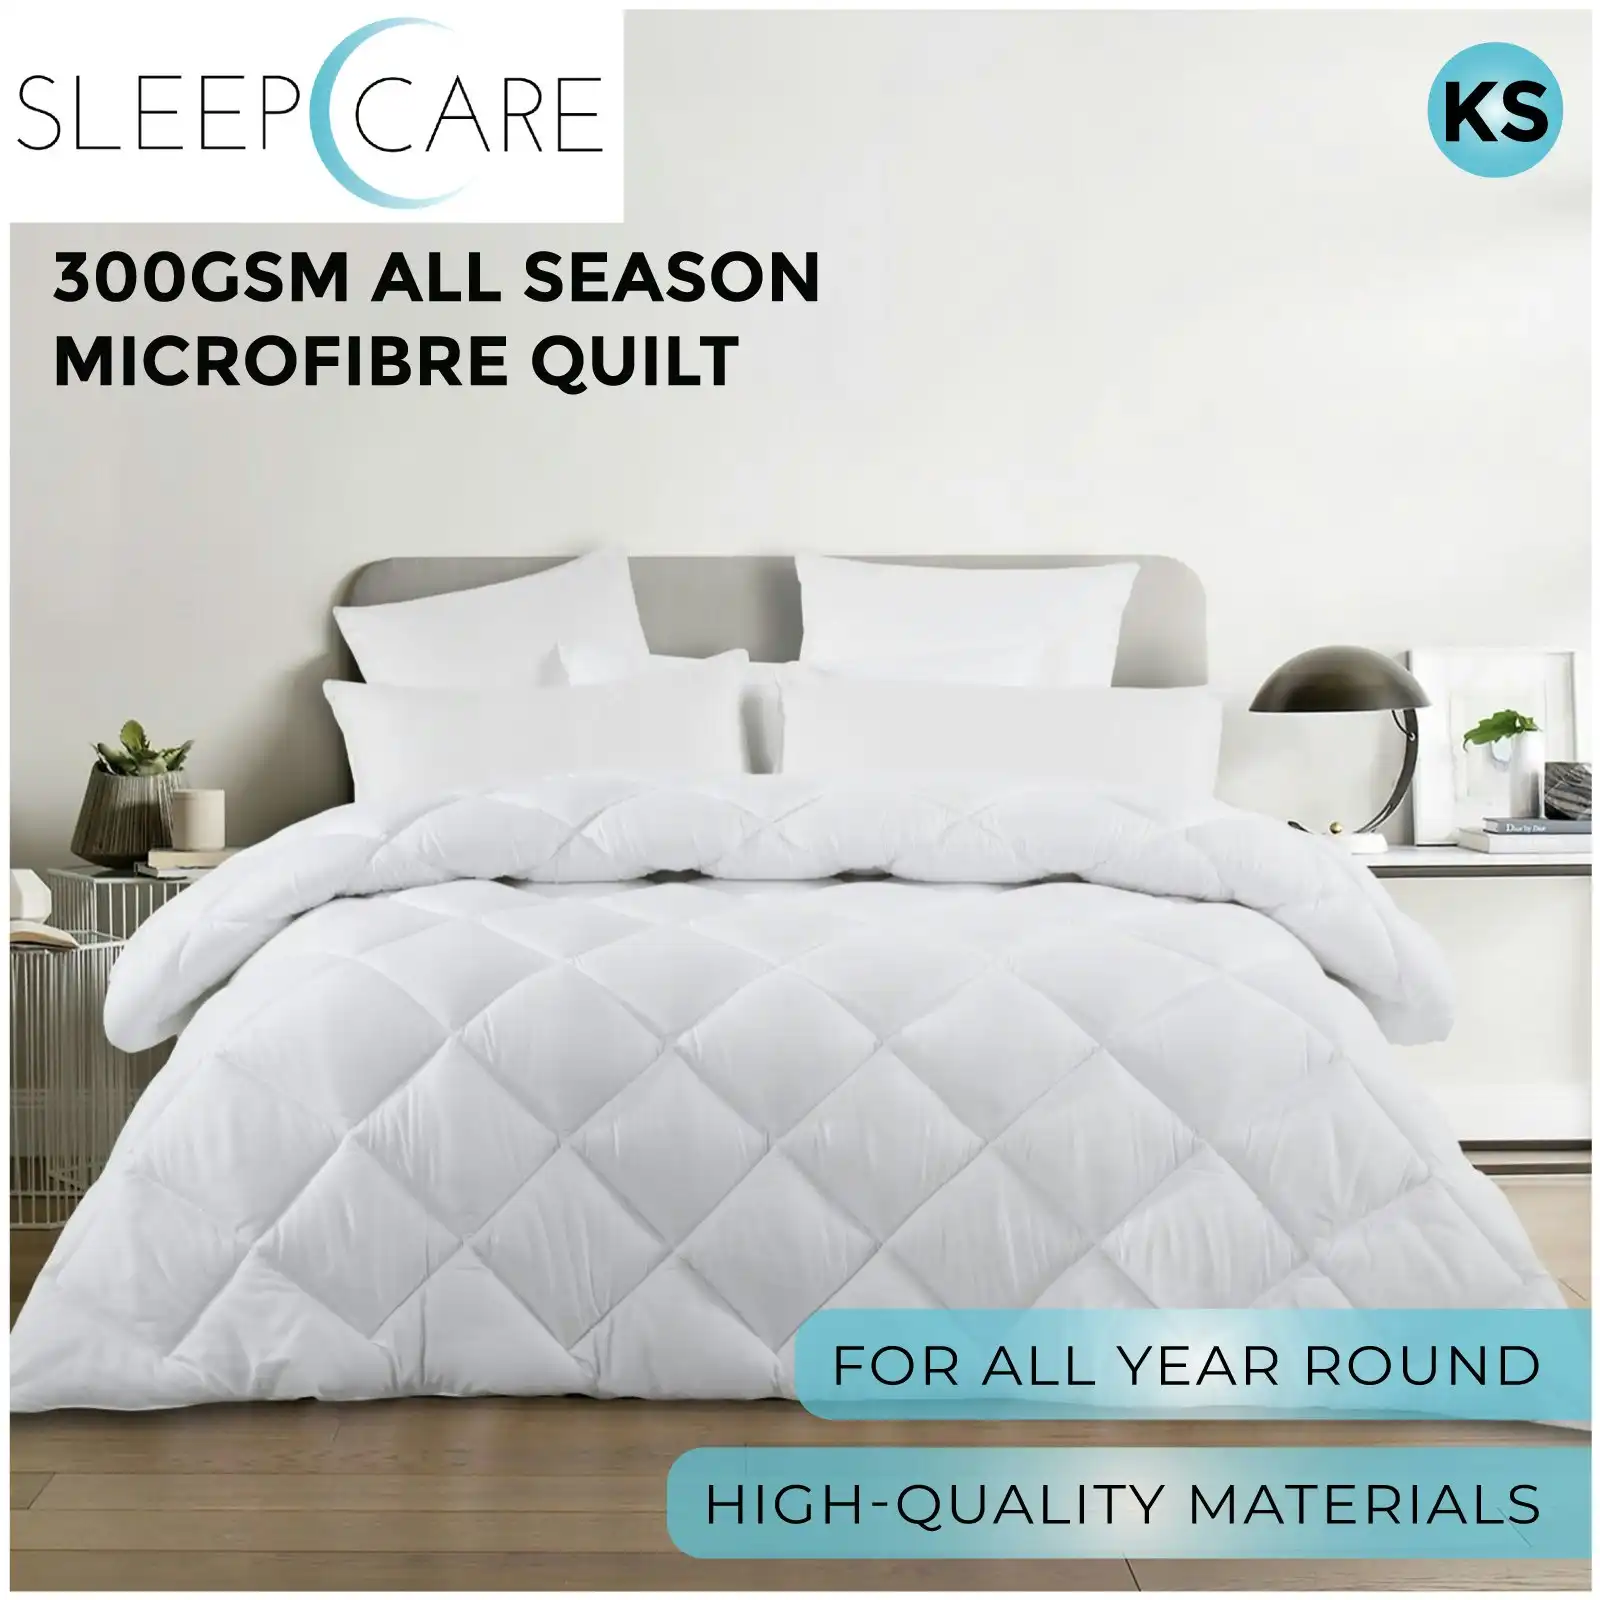 Sleepcare 300GSM All Season Microfibre Quilt King Single Bed